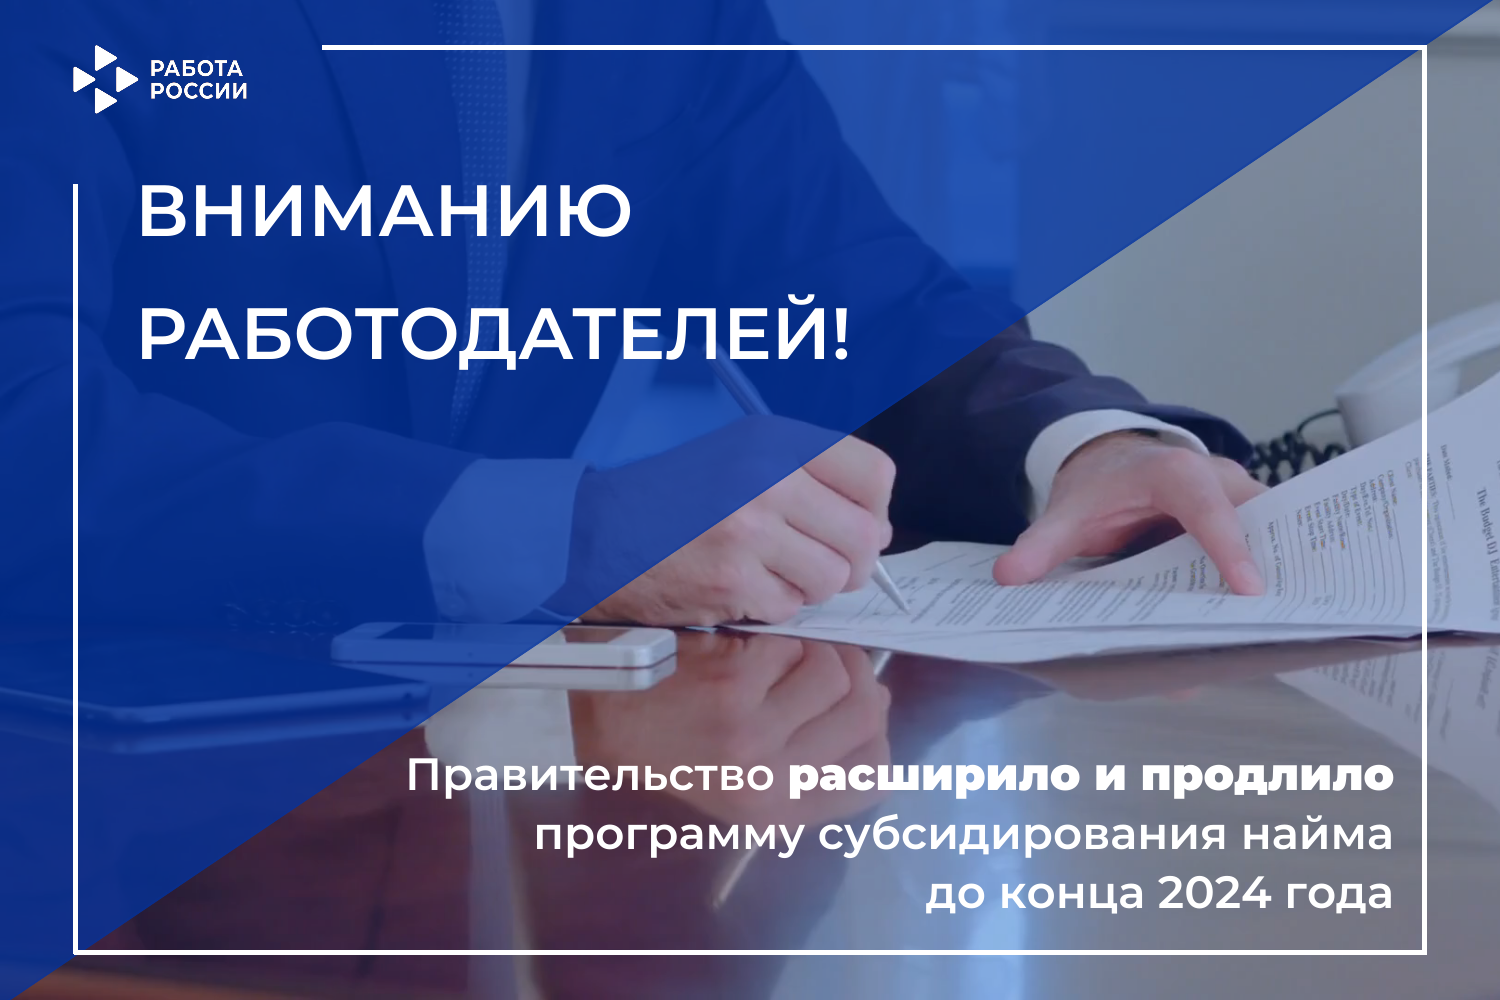 Правительство РФ расширило и продлило программу субсидирования найма до конца 2024 года